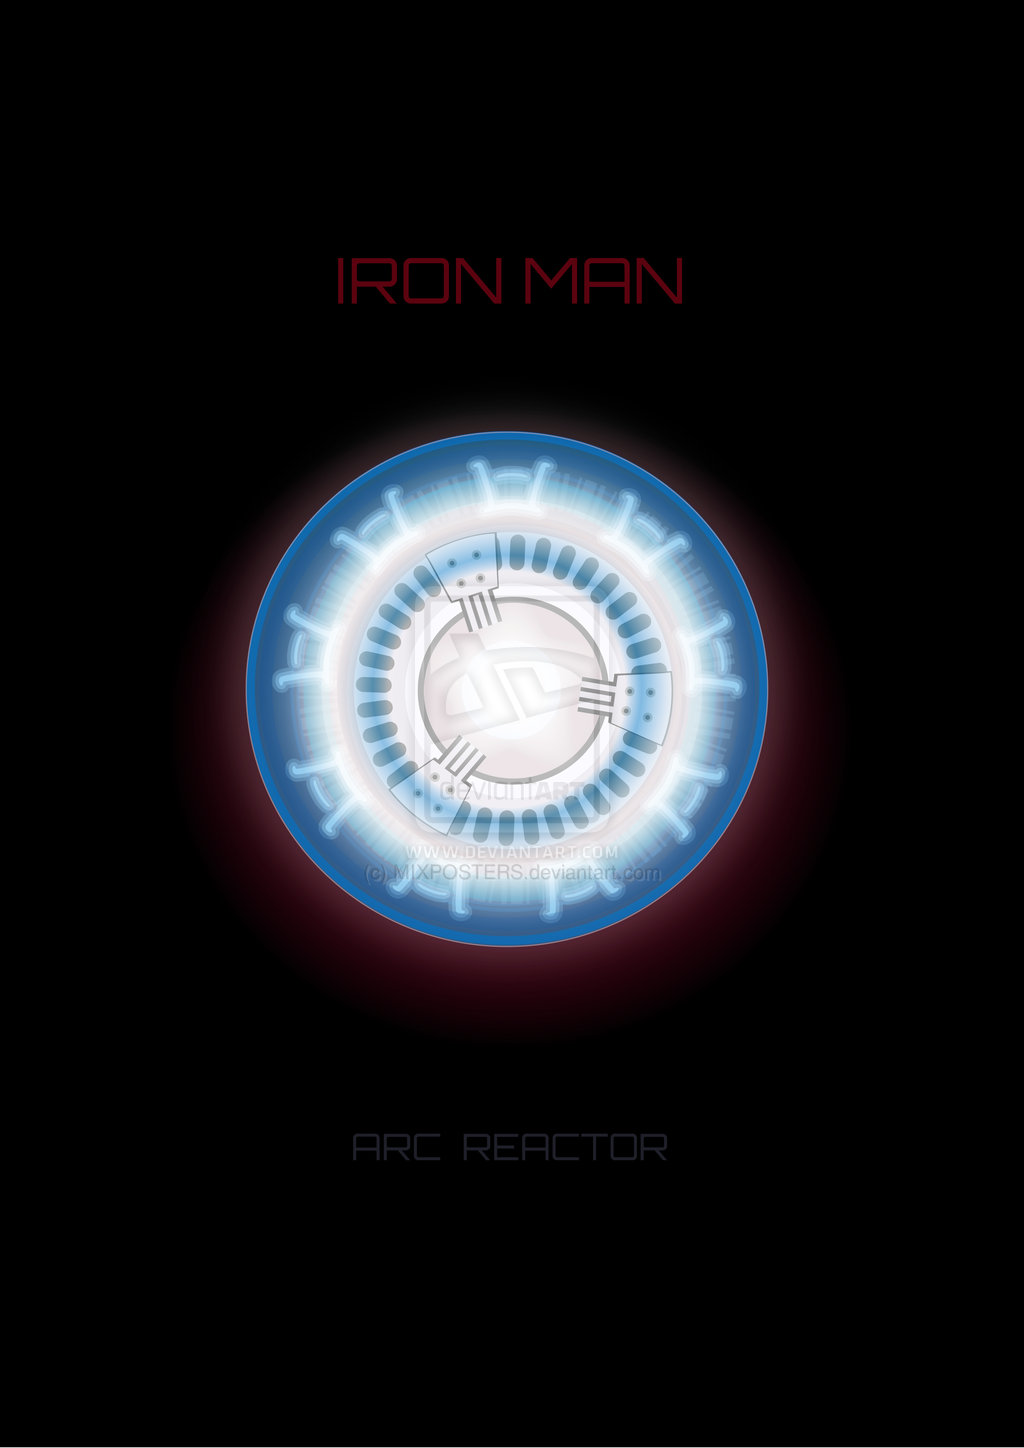 Ironman Arc Reactor Wallpaper Hd Iron man   arc reactor poster